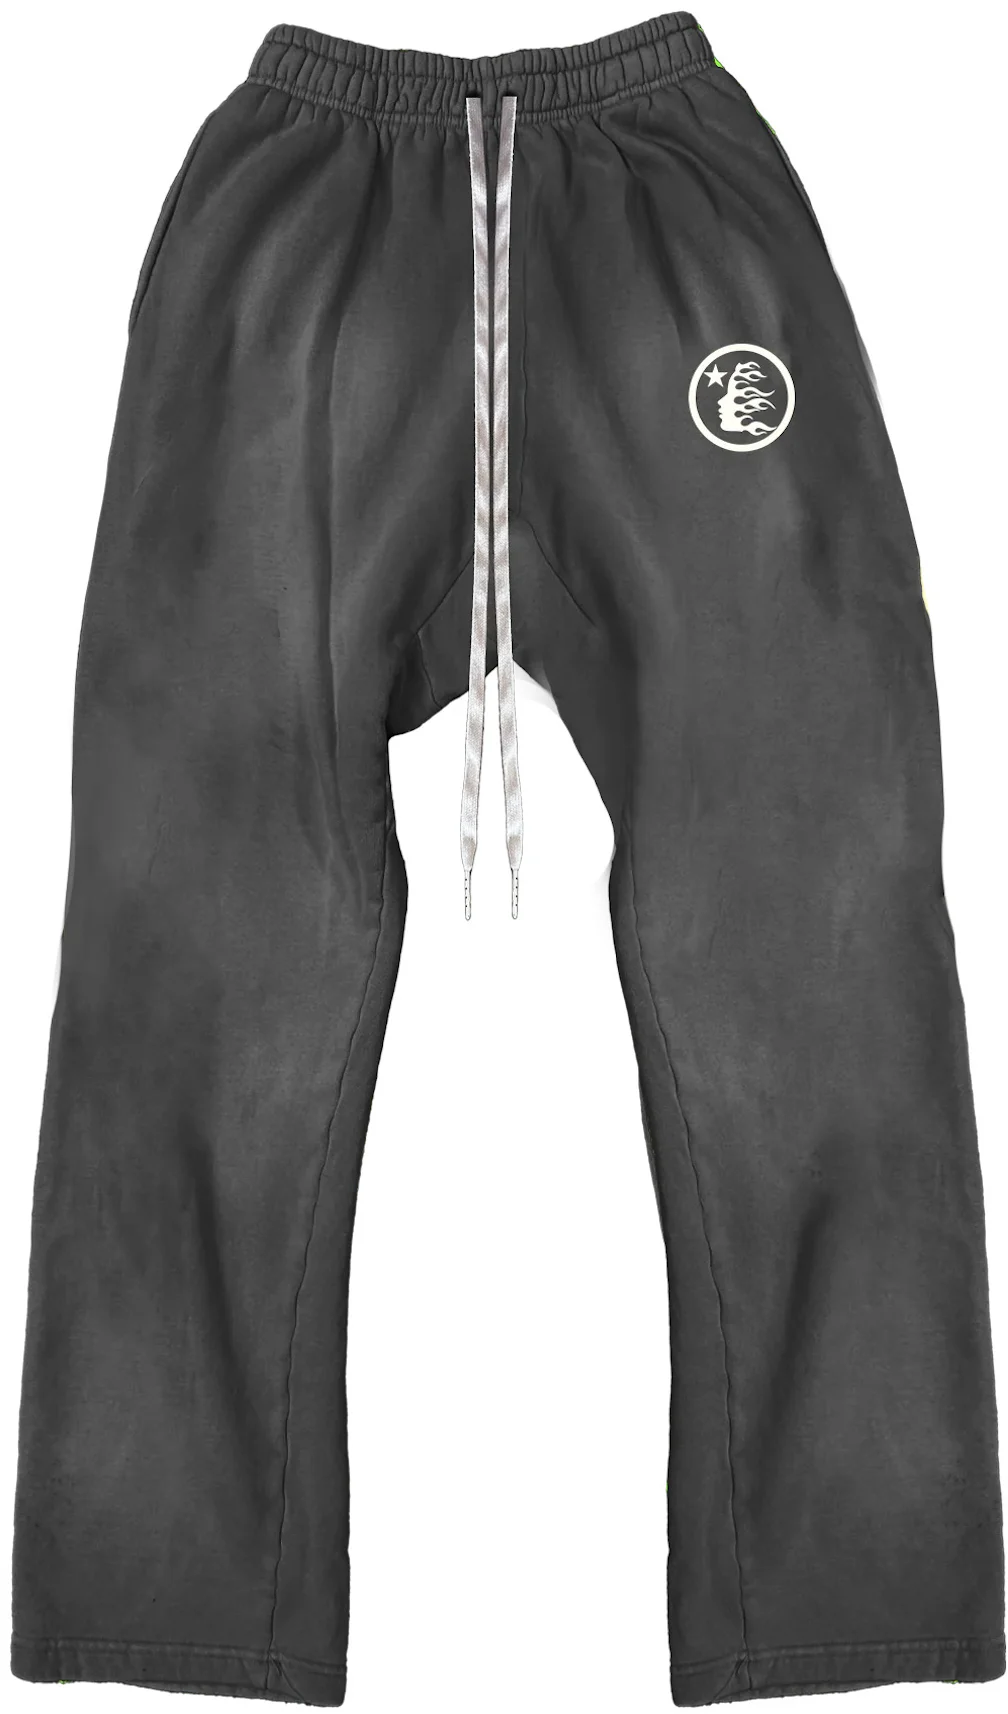 Hellstar Uniform Sweats Black - FW23 - US